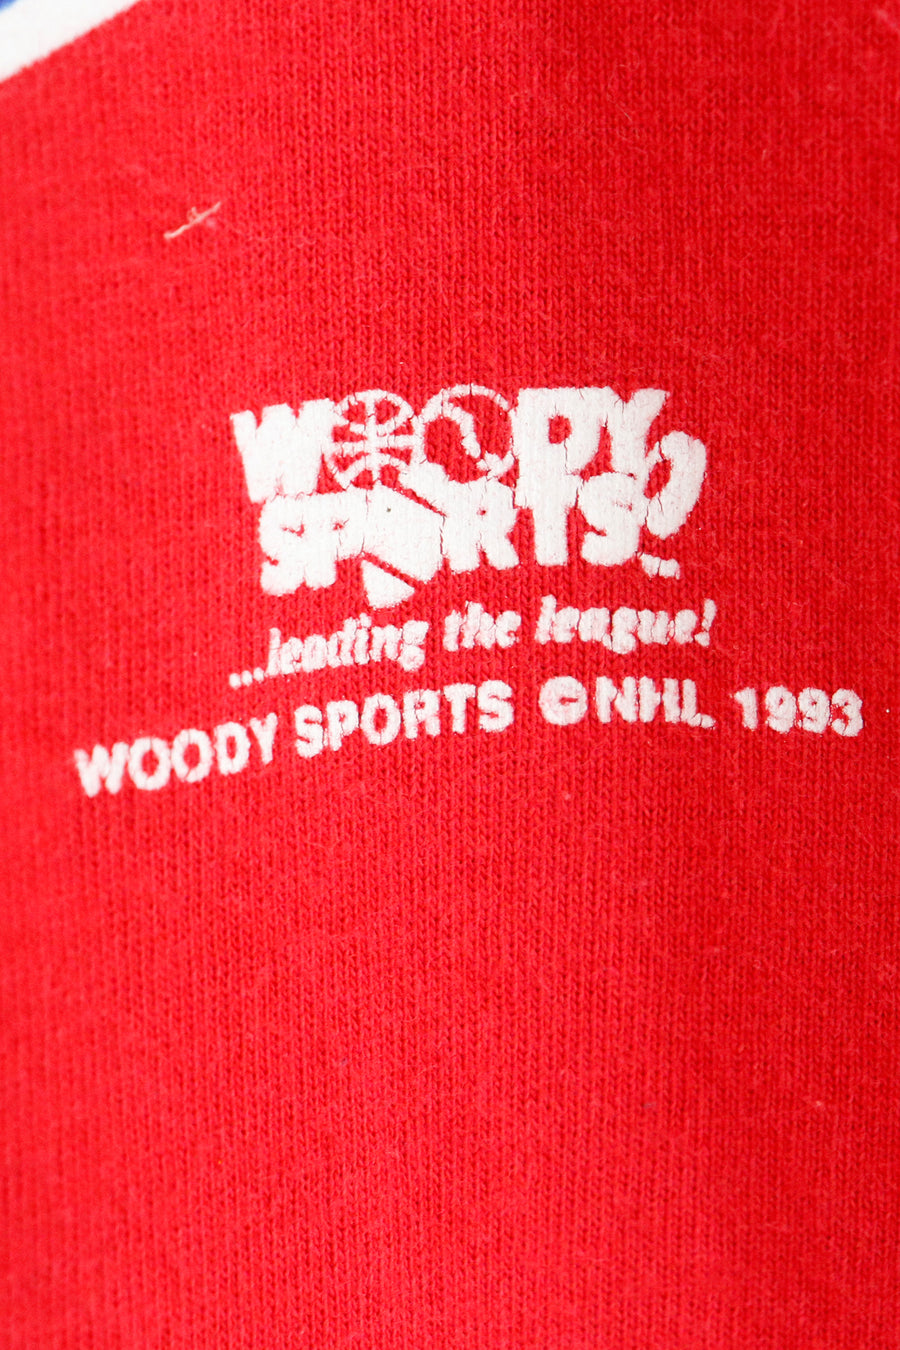 Vintage 1993 Montreal Canadiens Patrick Roy T Shirt Sz XL